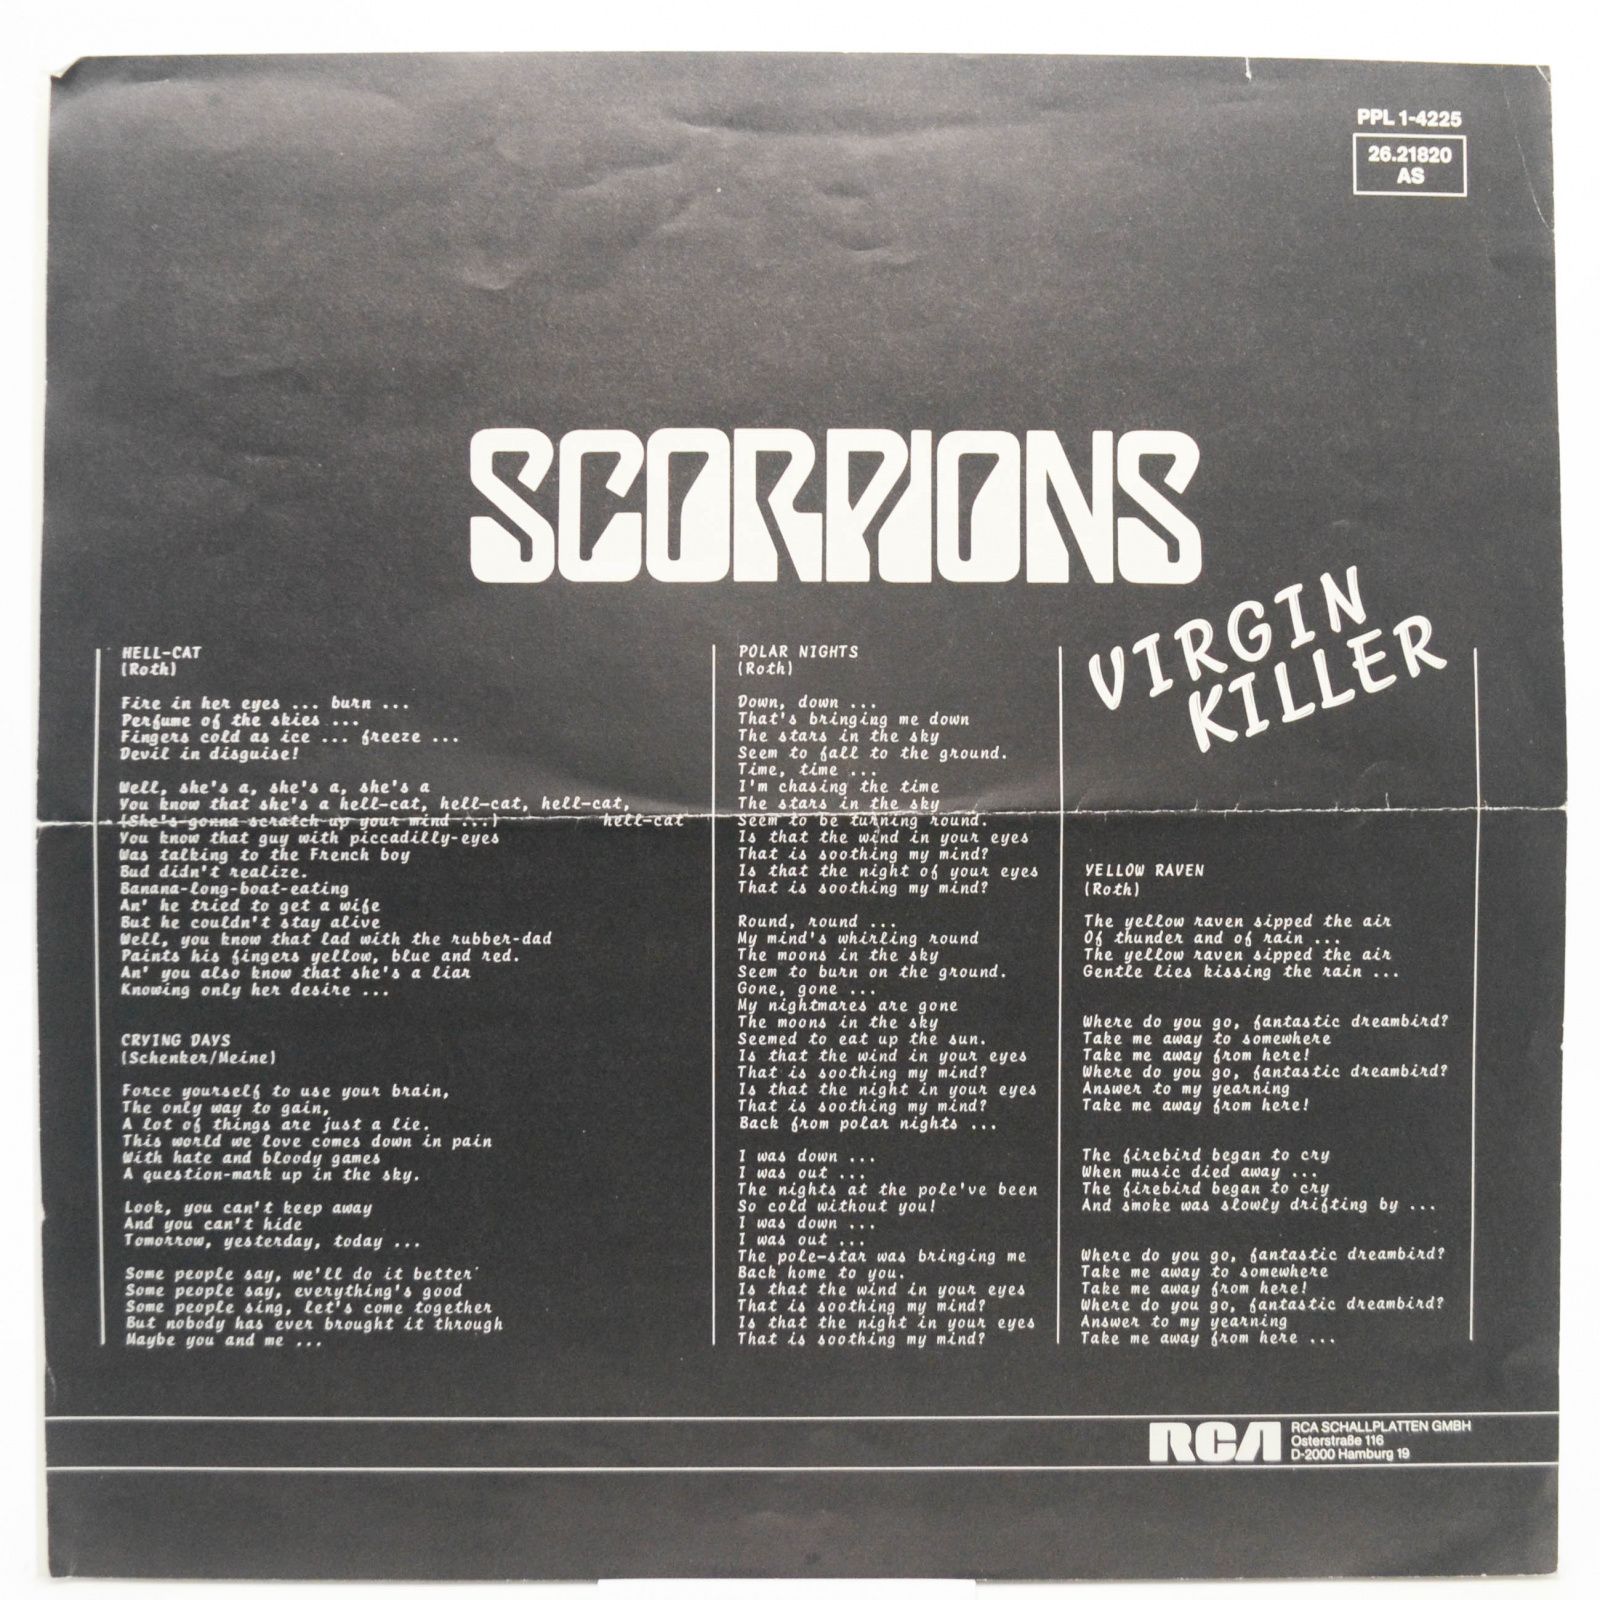 Scorpions — Virgin Killer (Germany), 1976